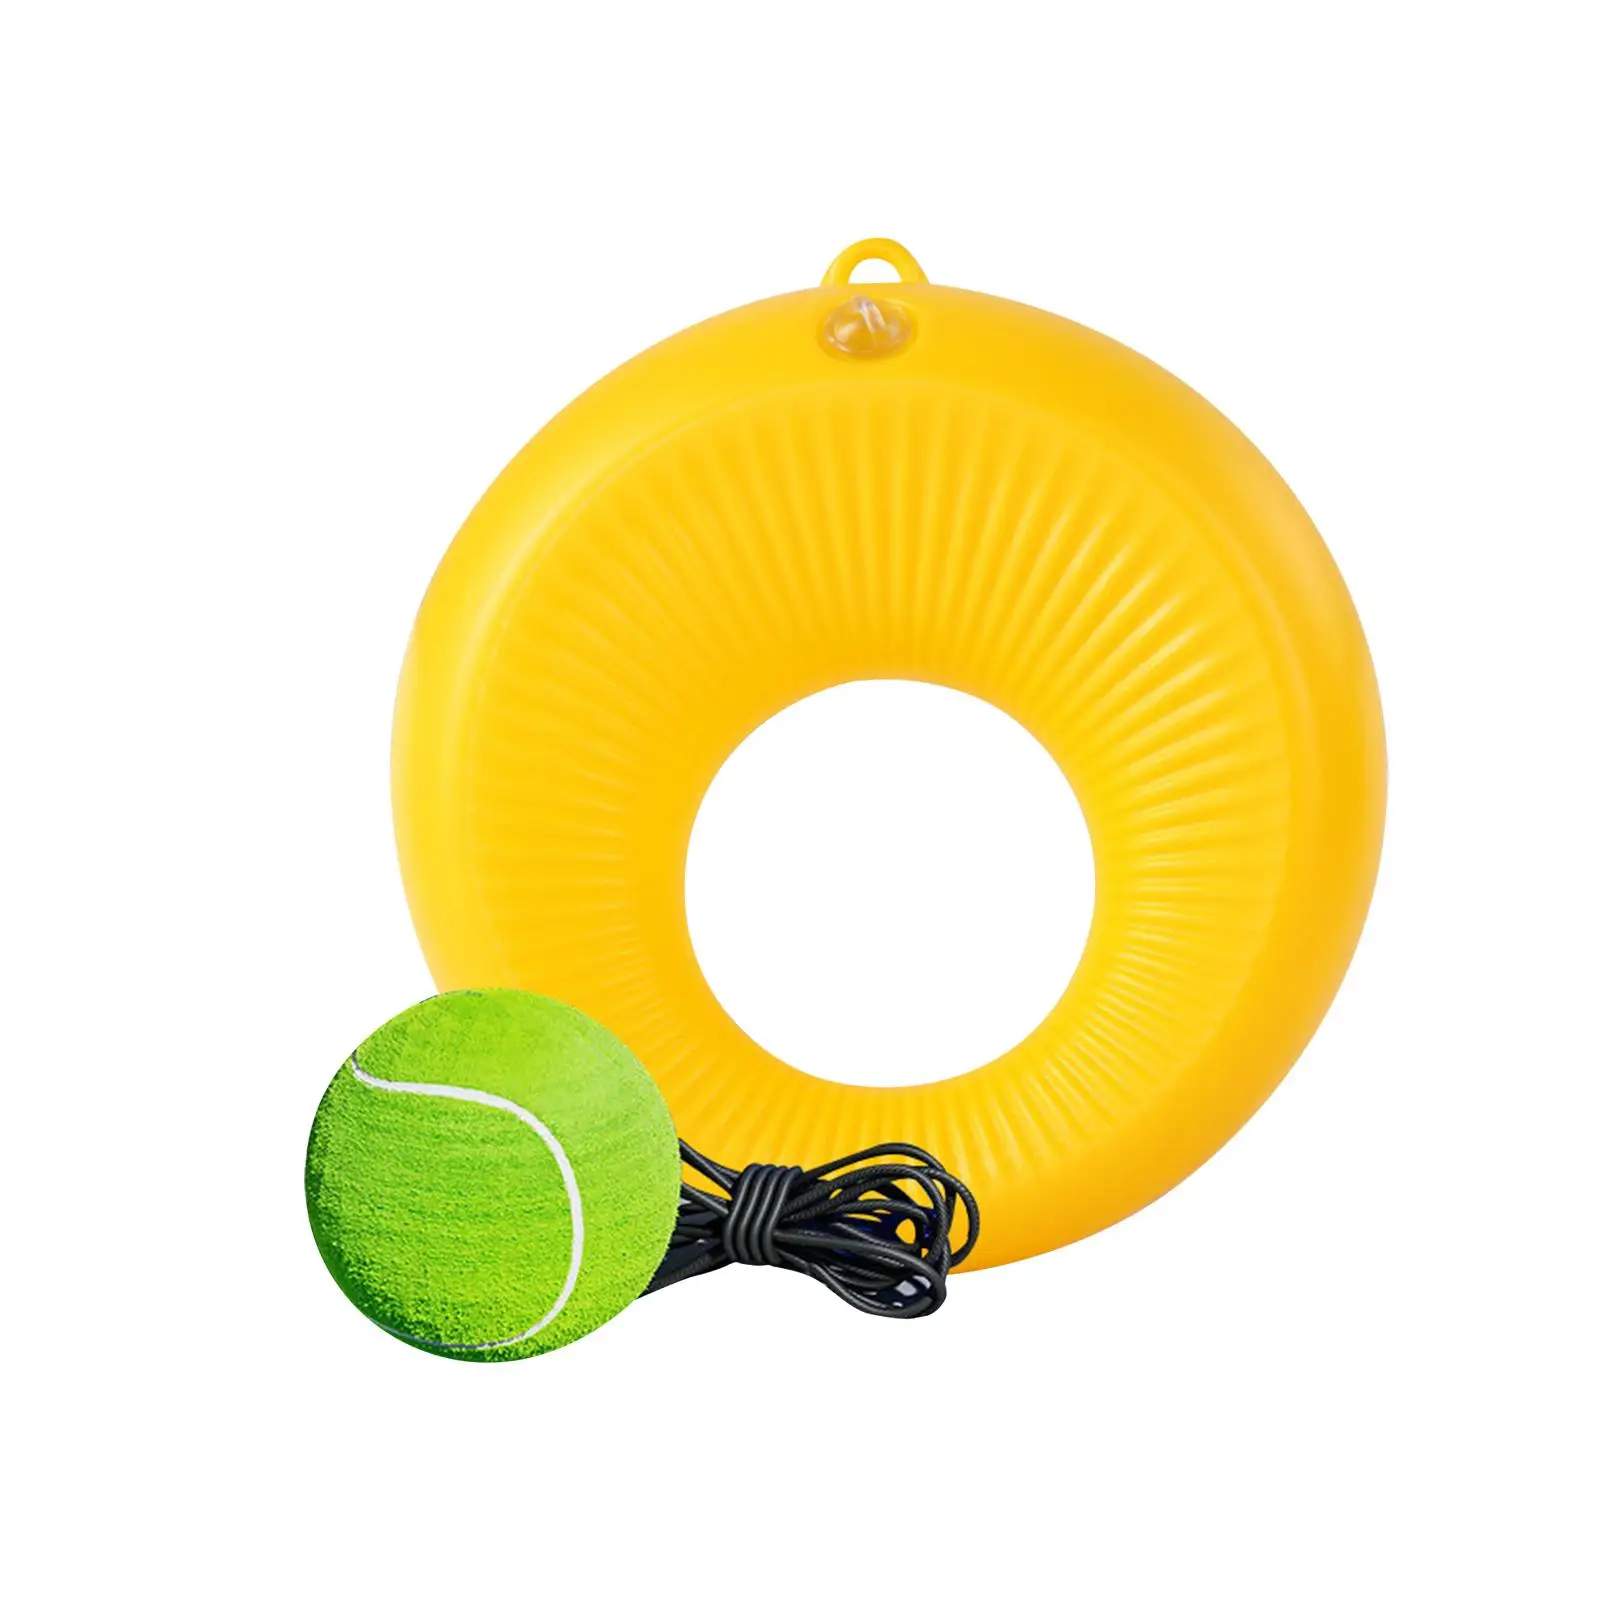 Tennis Rebounder with String Parent Child Toy Portable Tennis Trainer Practice